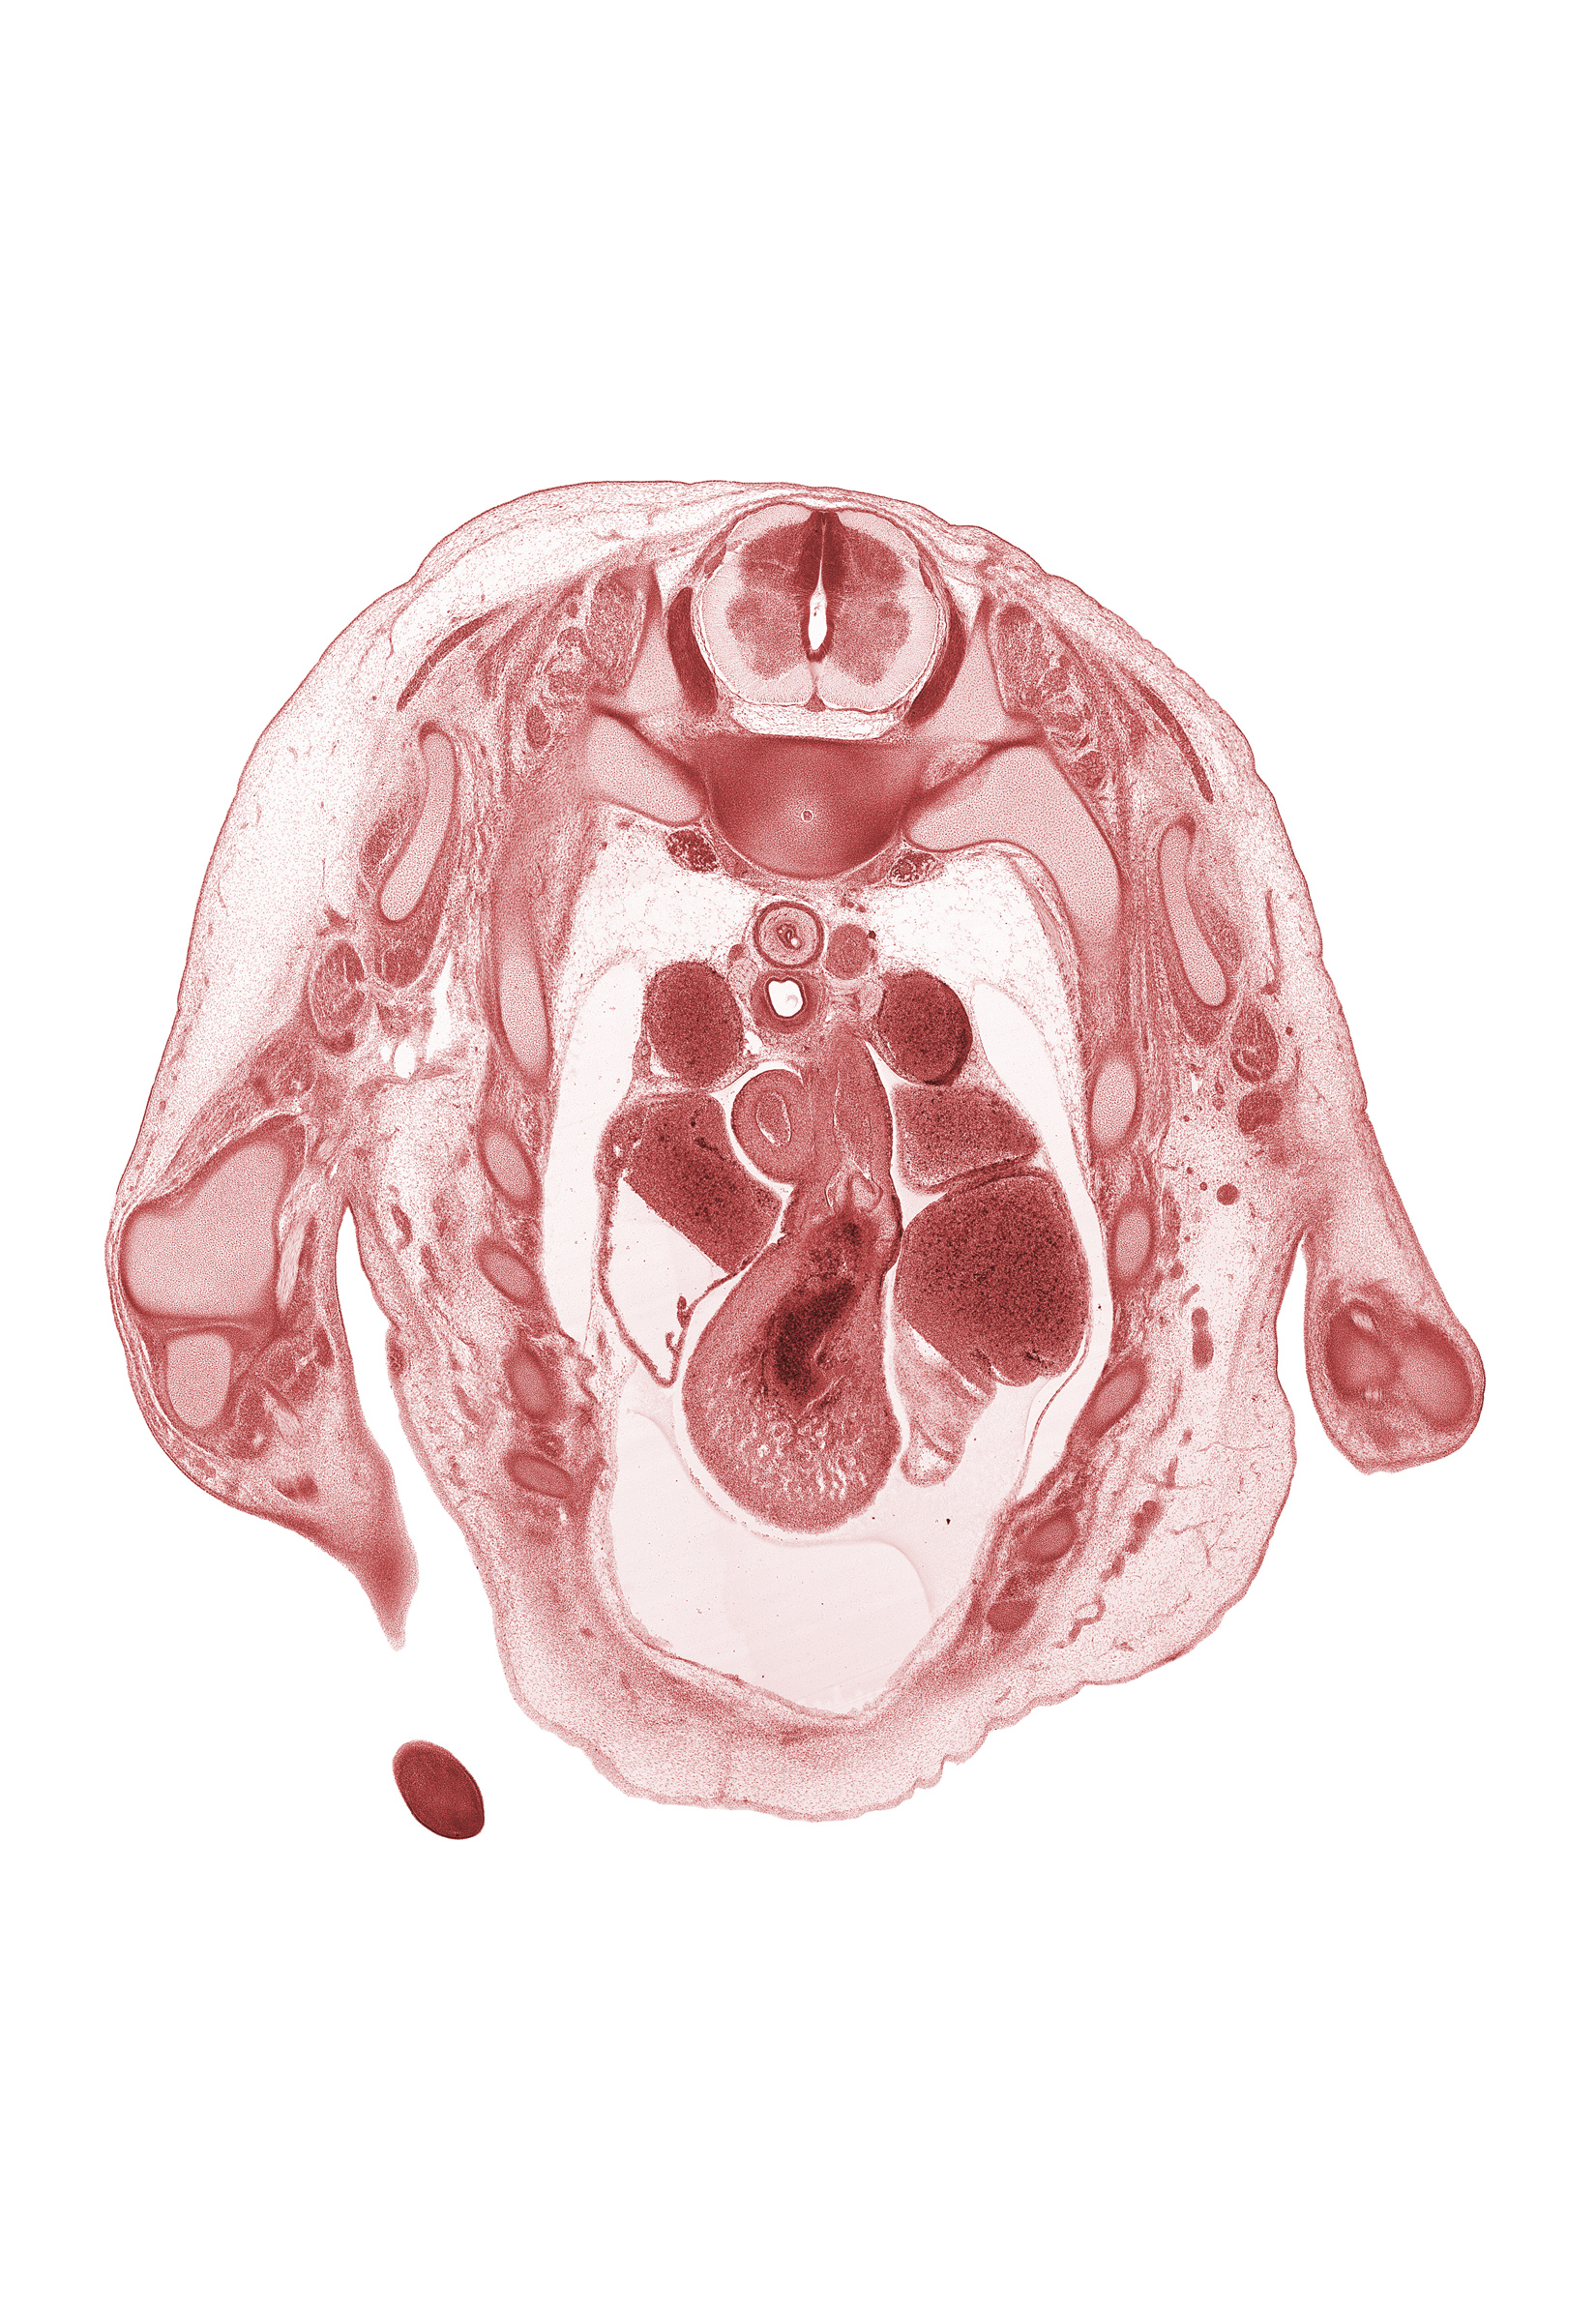 T-1 spinal ganglion, ascending aorta, head of rib 2, infundibulum of right ventricle, left vagus nerve (CN X), pulmonary semilunar valve, pulmonary trunk, rhomboid muscle, rib 3, right atrium, right vagus nerve (CN X), scapula, subscapularis muscle, sympathetic trunk, trabecular part of right ventricle, ulnar nerve